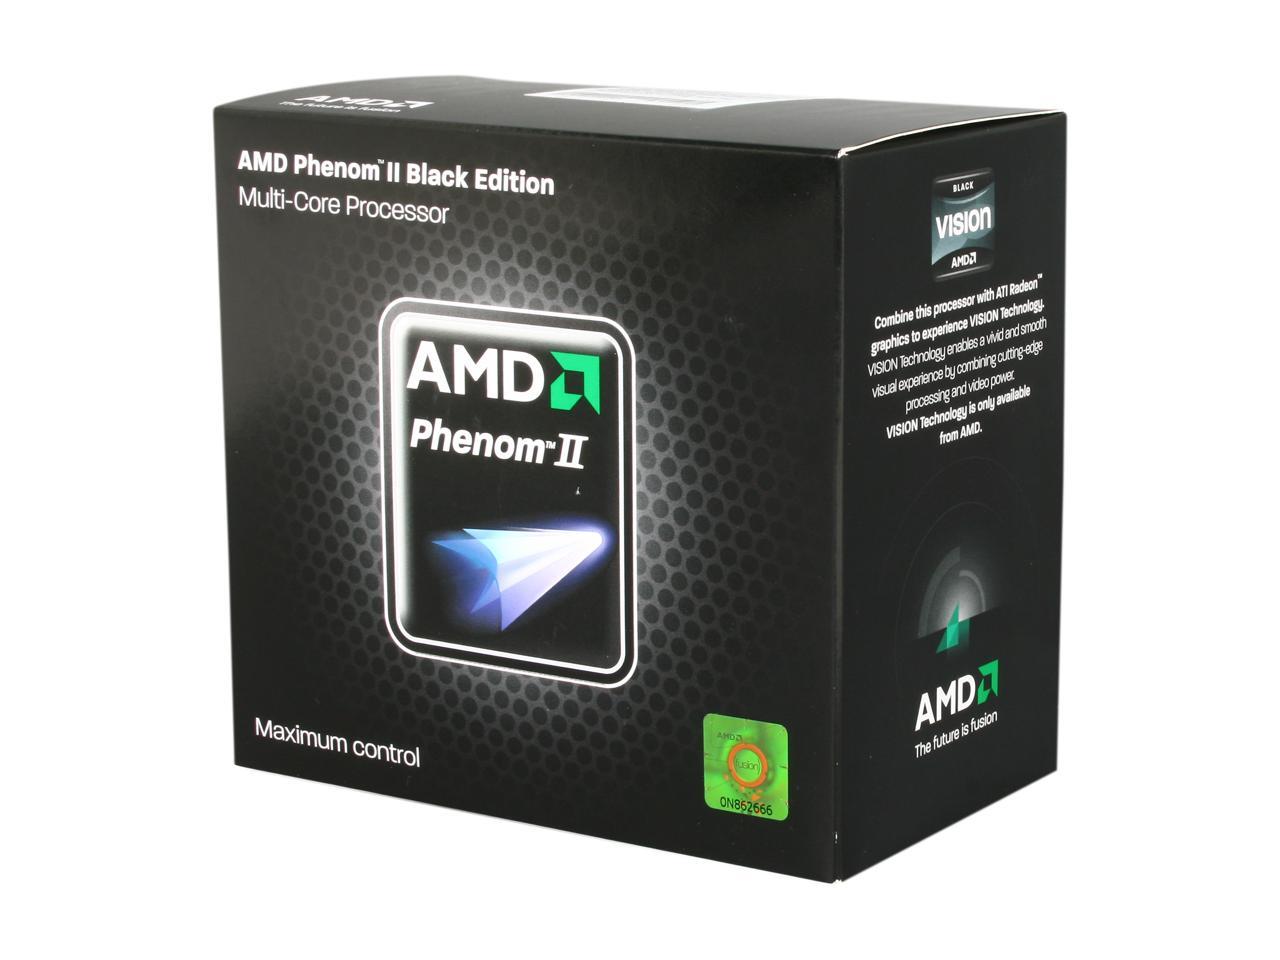 AMD Phenom II X6 1100T Black Edition Thuban 6-Core 3.3GHz, 3.7GHz Turbo Socket AM3 125W HDE00ZFBGRBOX Desktop Processor